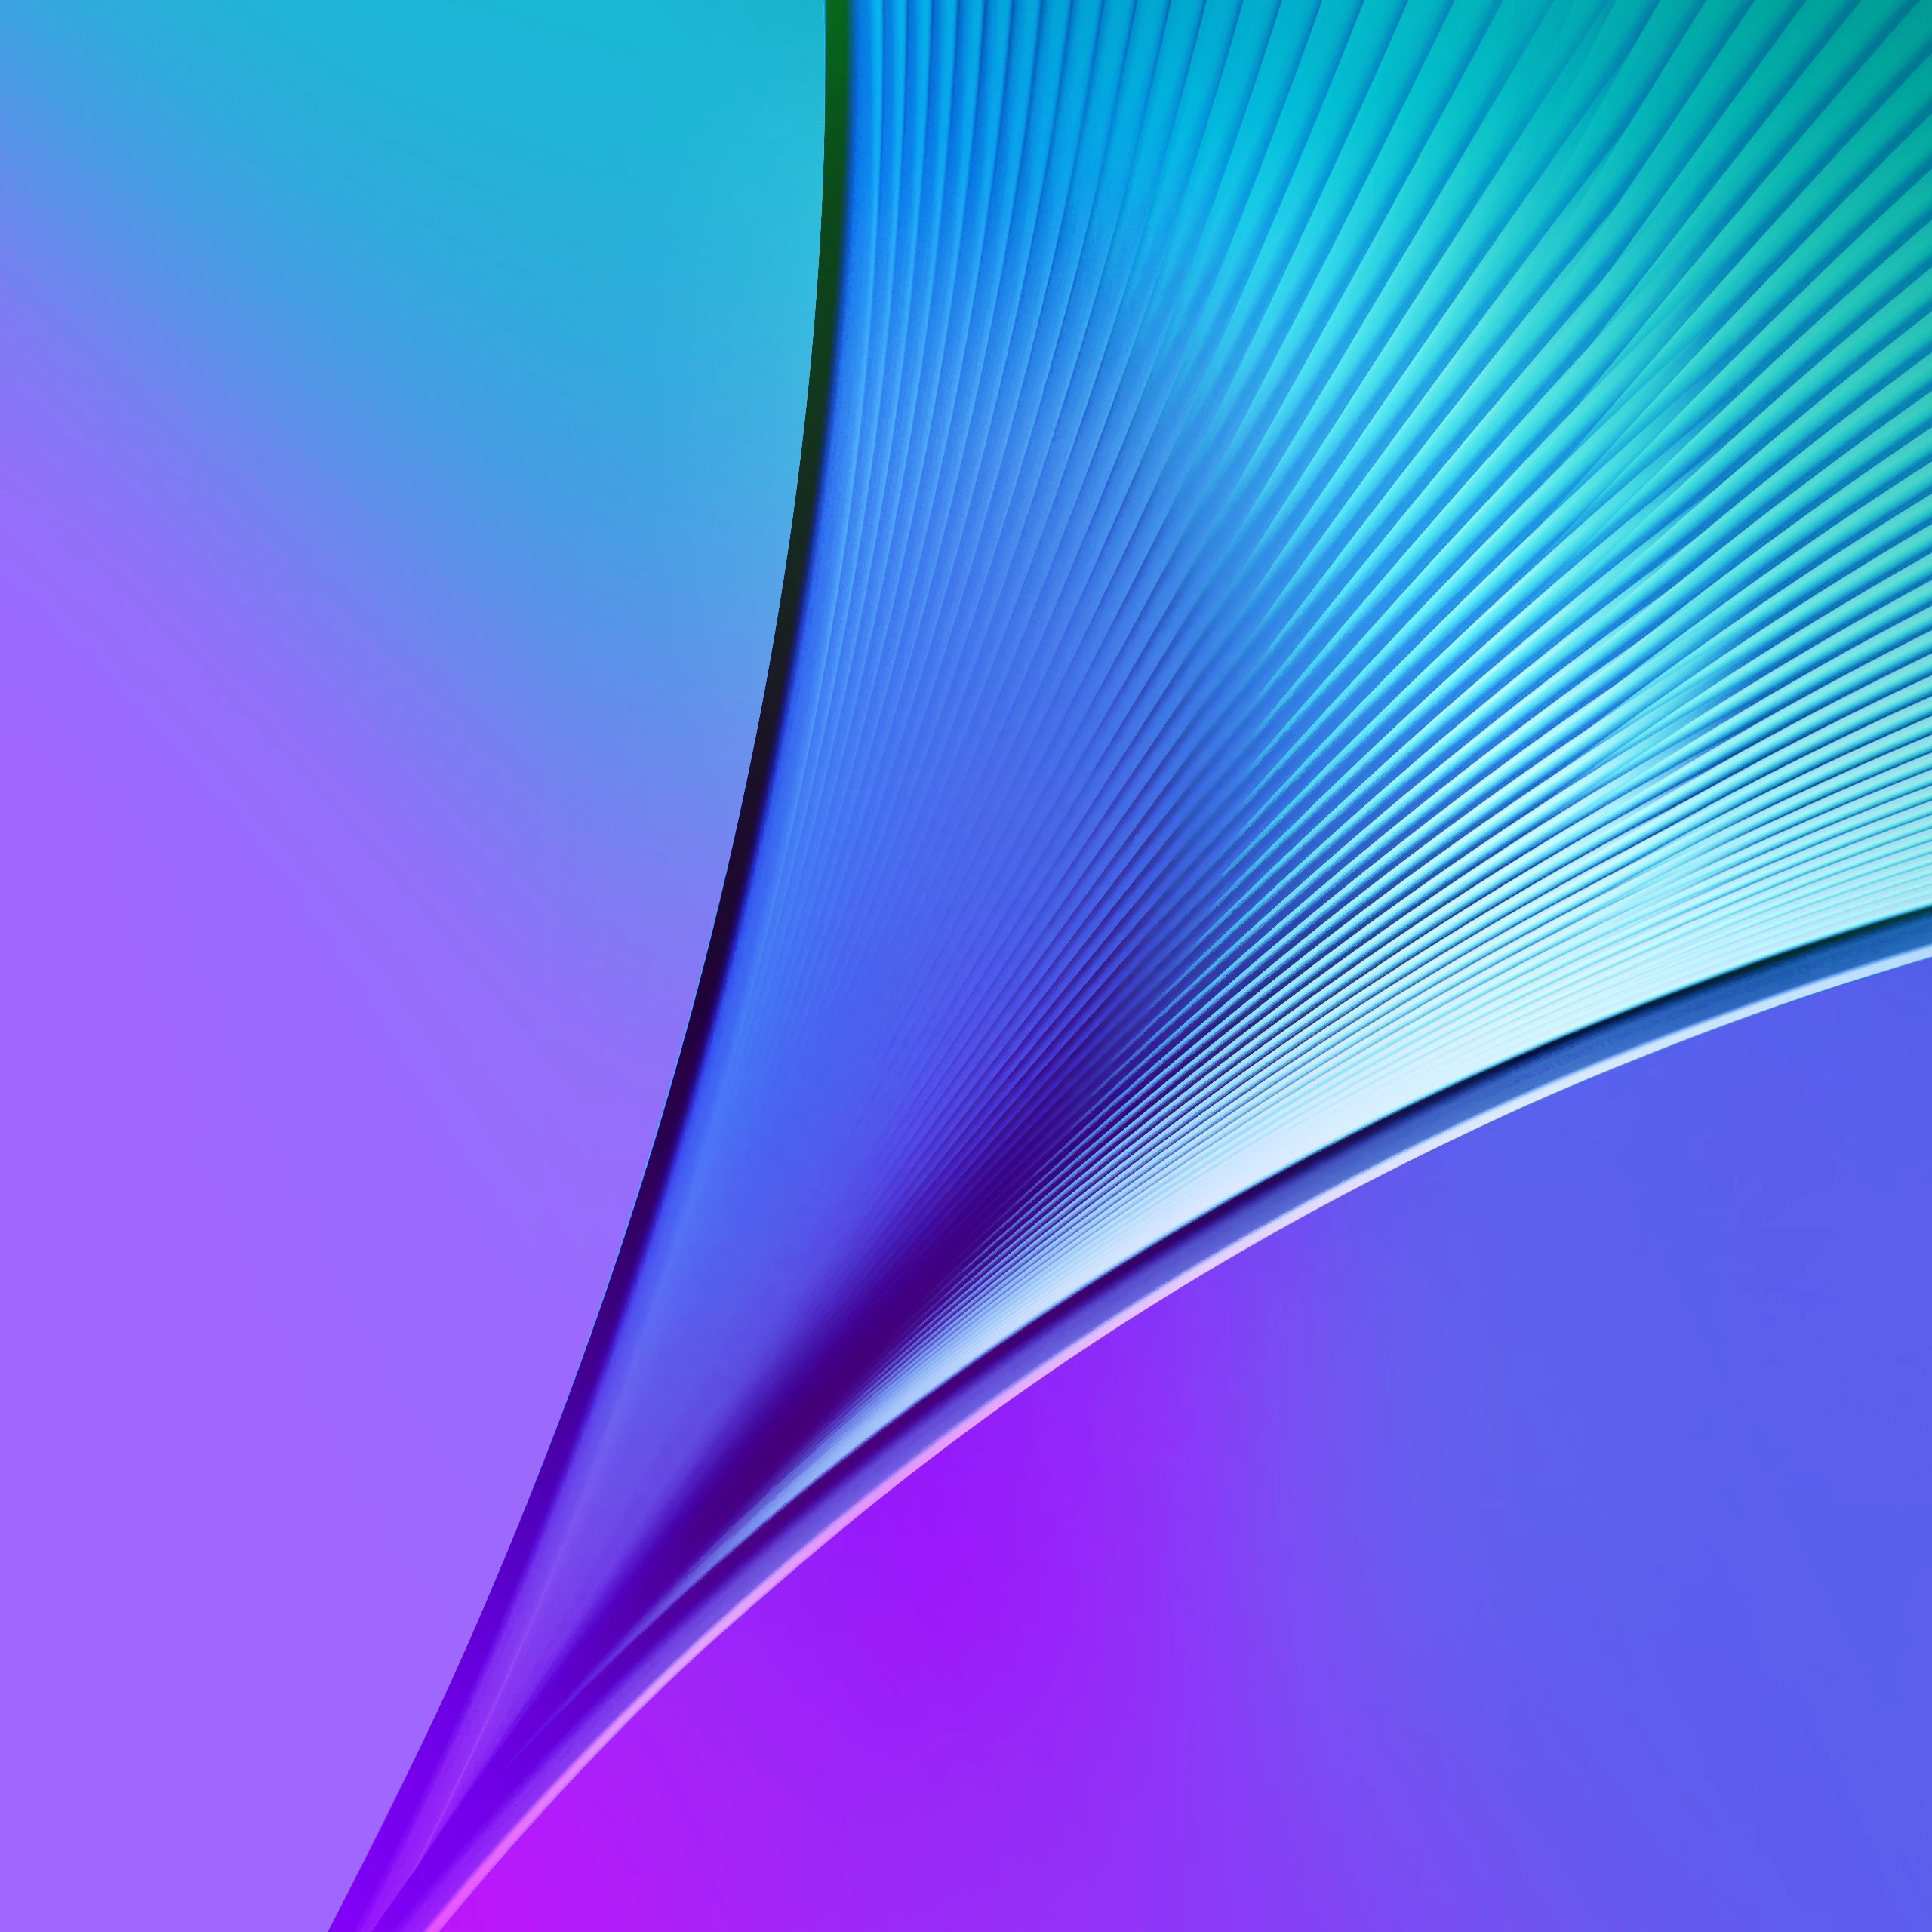 Samsung Galaxy Note 5 Stock Wallpaper 2 - [2560 x 2560]